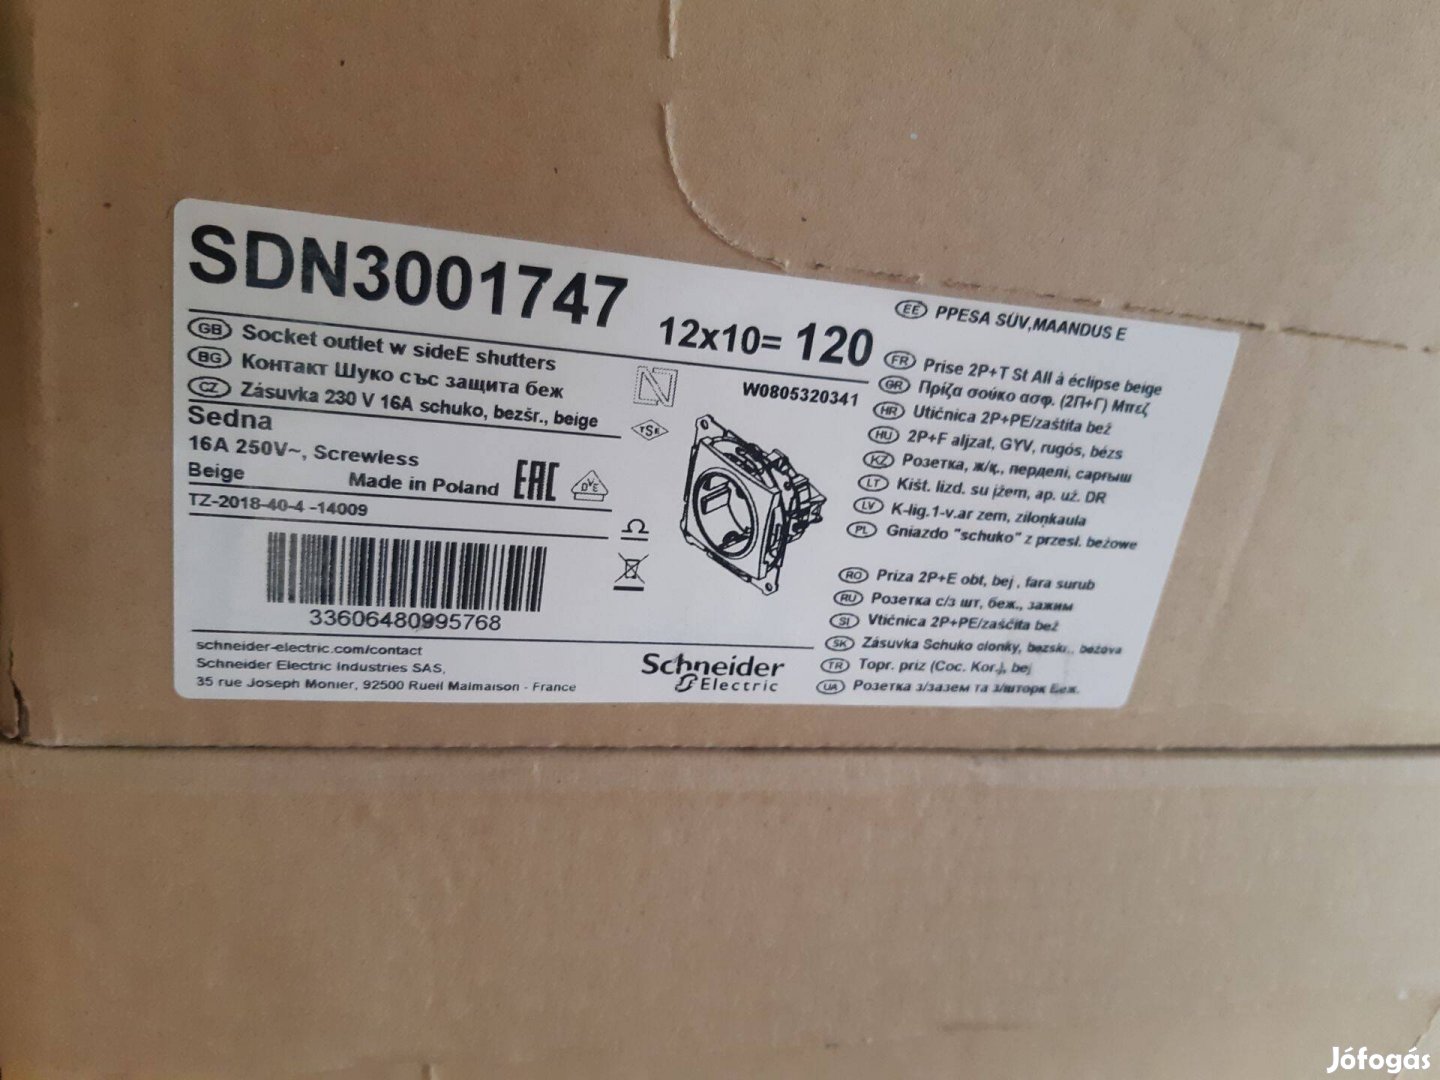 Schneider Sedna SDN3001747 2P+F aljzat gyermekvédelemmel, rugós